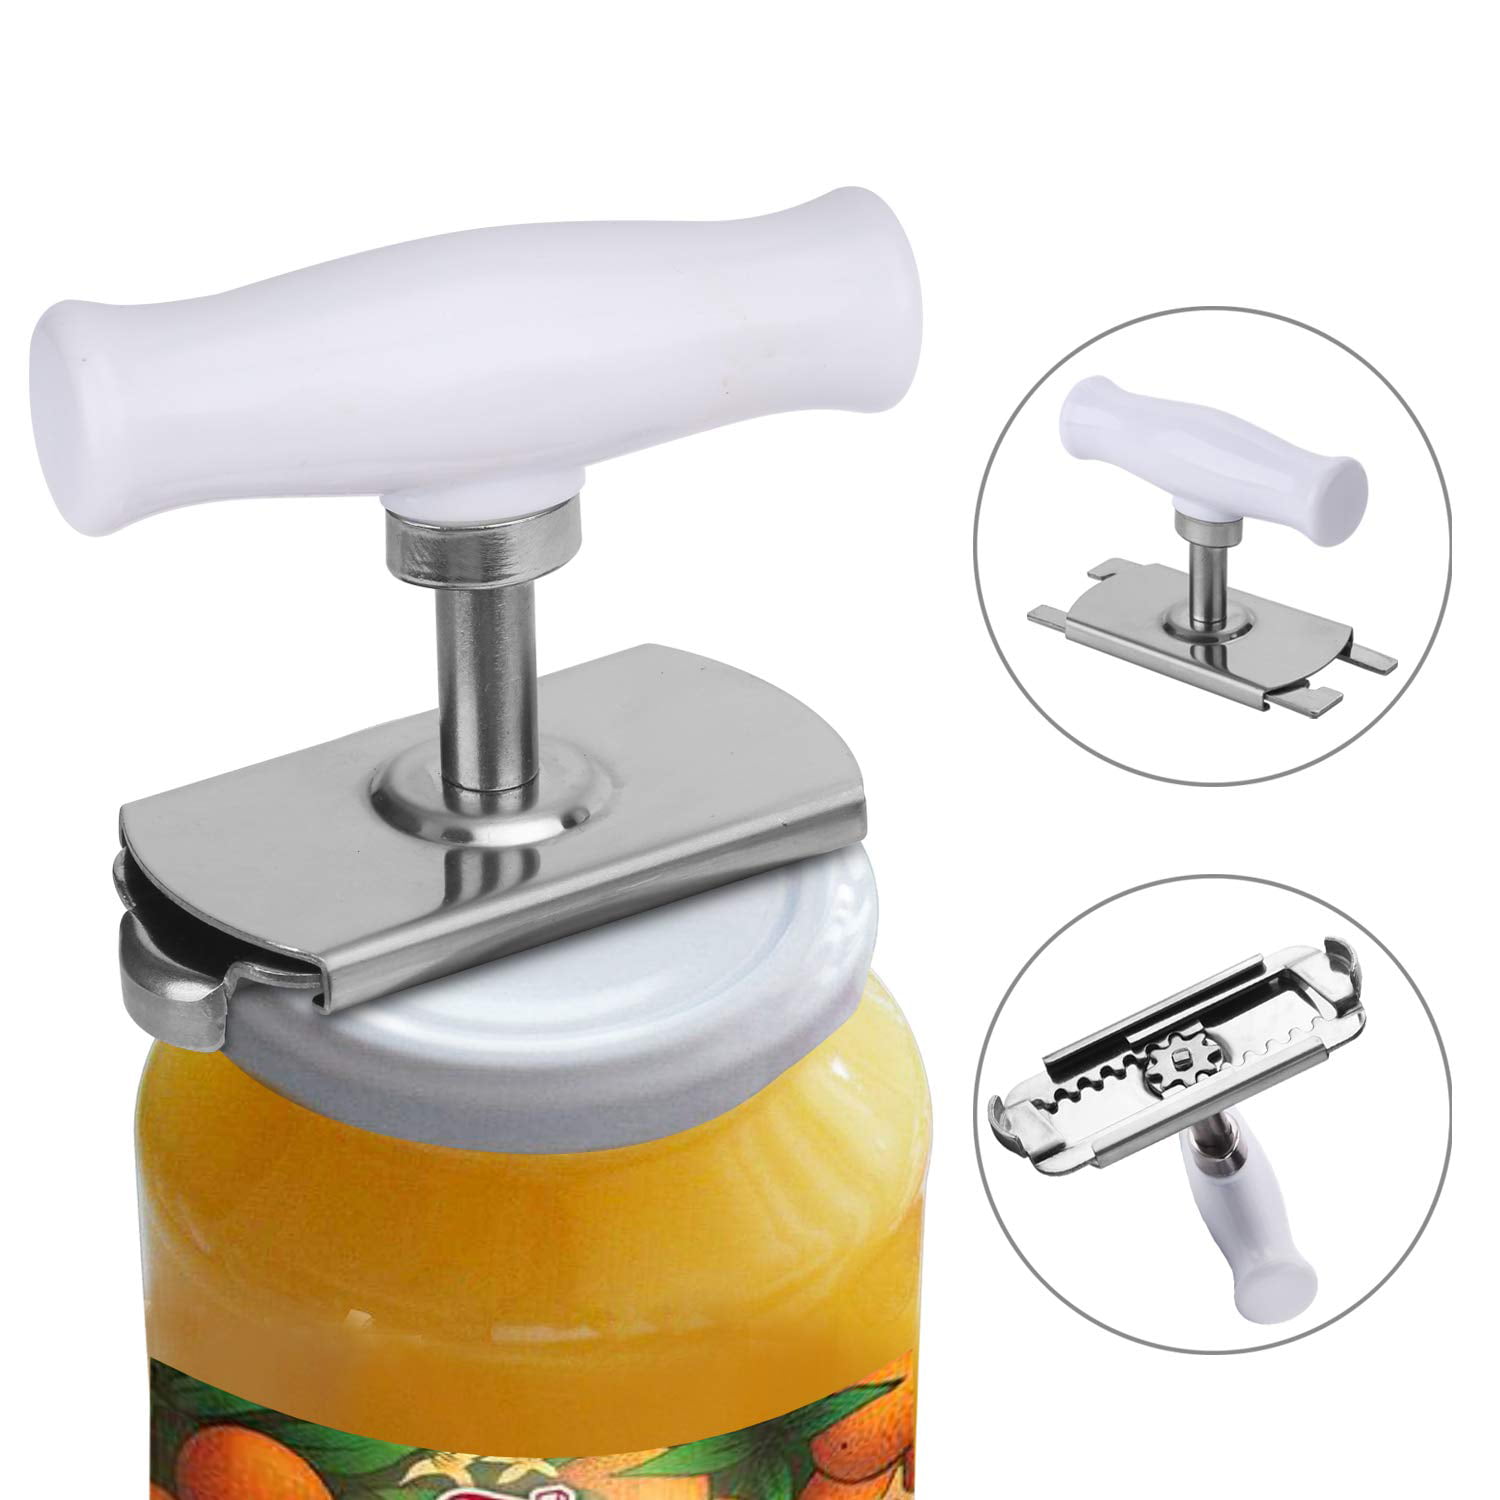 2 Pcs Master Jar Opener Adjustable Stainless Steel Bottle Opener Set for Seniors with Arthritis Metal Keychain Beer Bottle Opener Included Kitchen Accessories